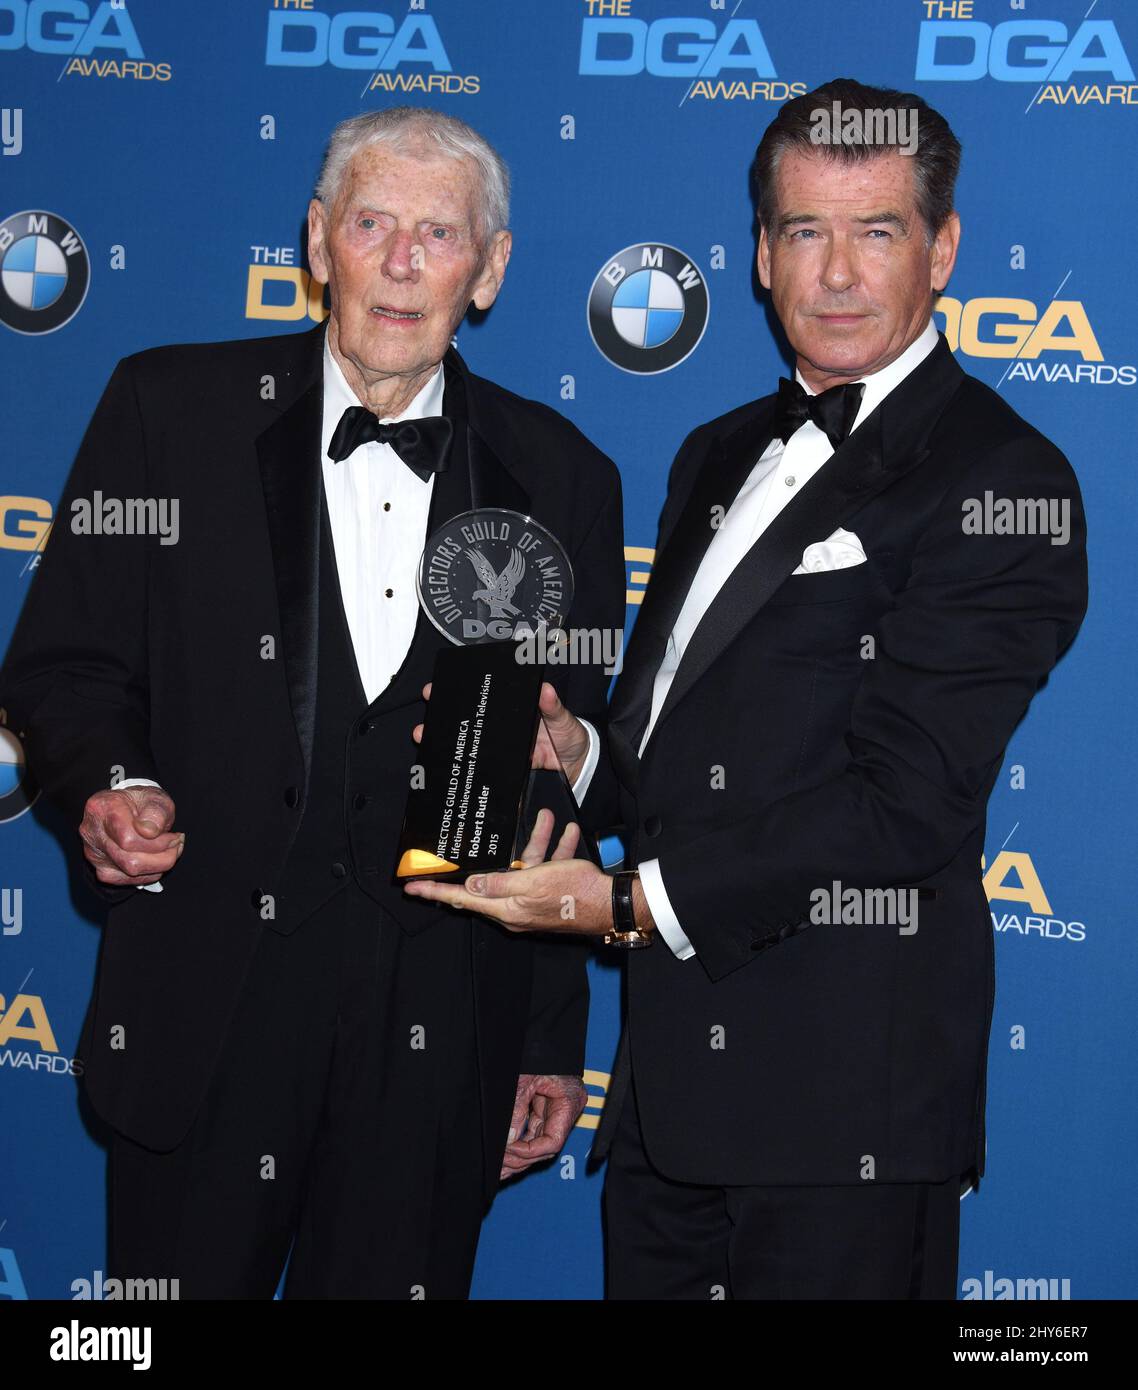 Pierce Brosnan and Robert Butler attending the 67th Annual DGA Awards held at the Hyatt Regency Century Plaza in Los Angeles, USA. Stock Photo